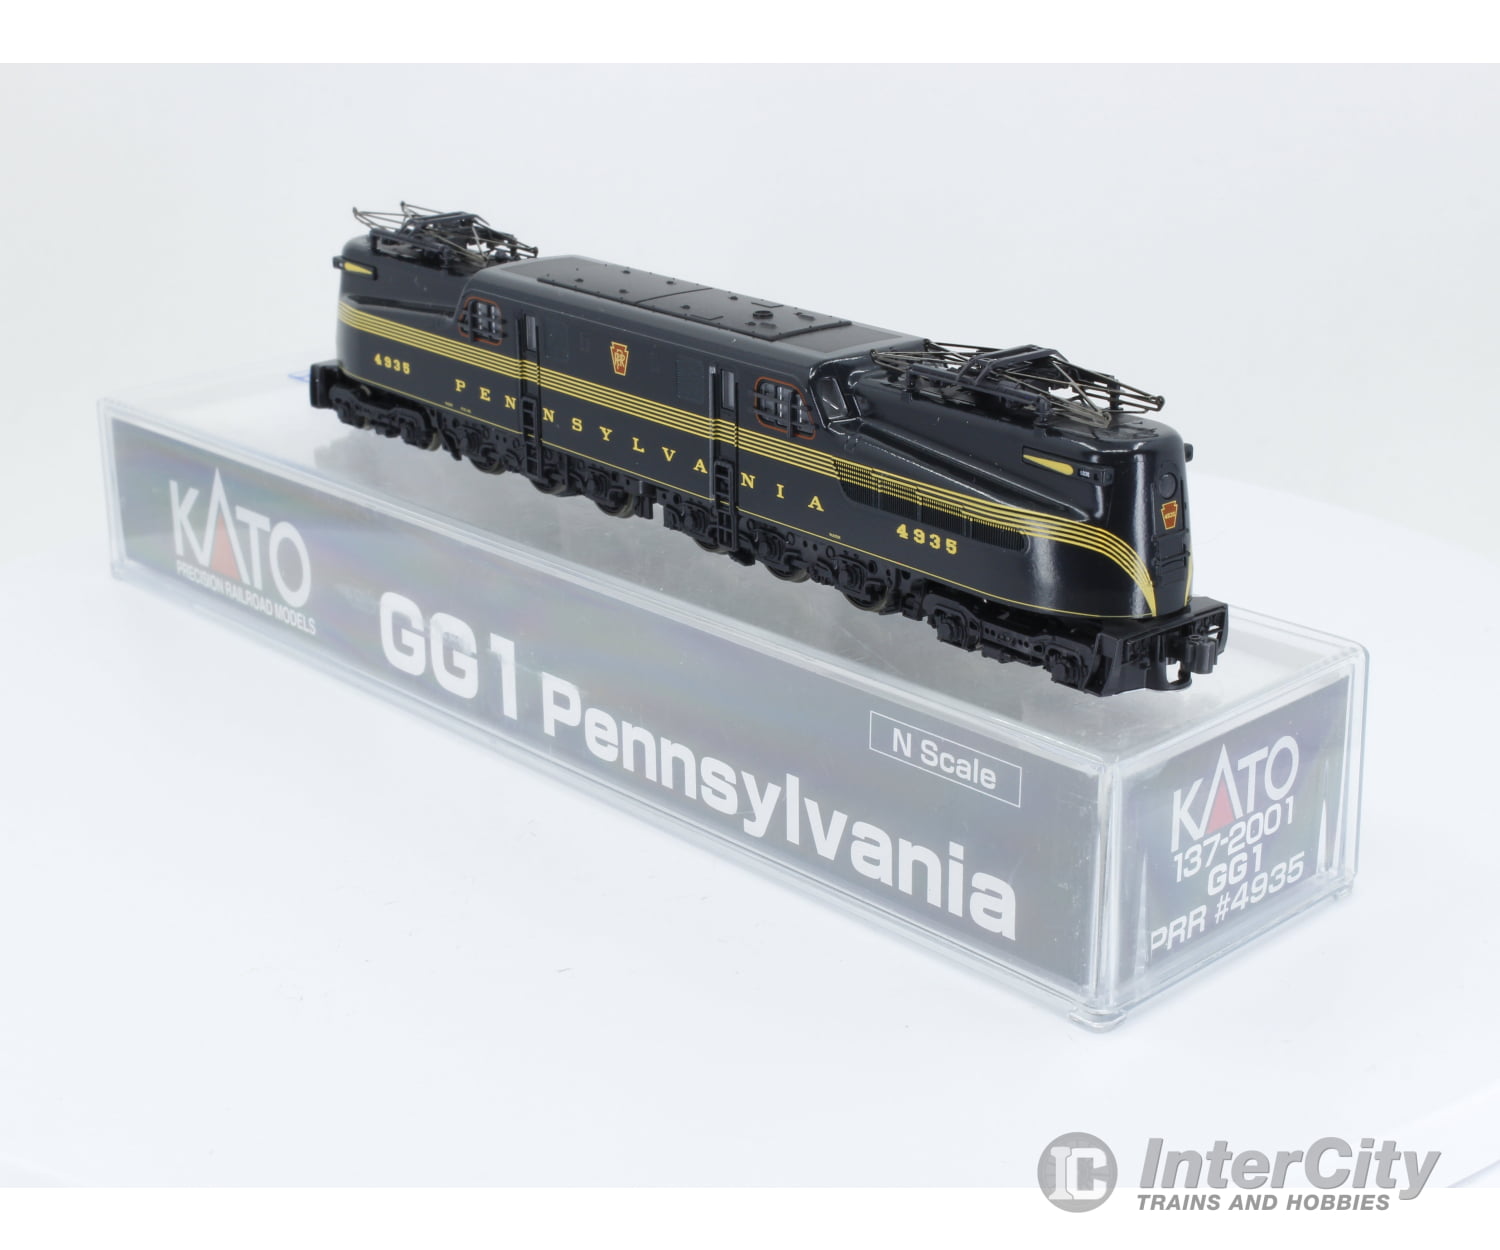 Kato 137-2001 N Gg1 Locomotive Pennsylvania (Prr) 4935 Analog Dc Locomotives